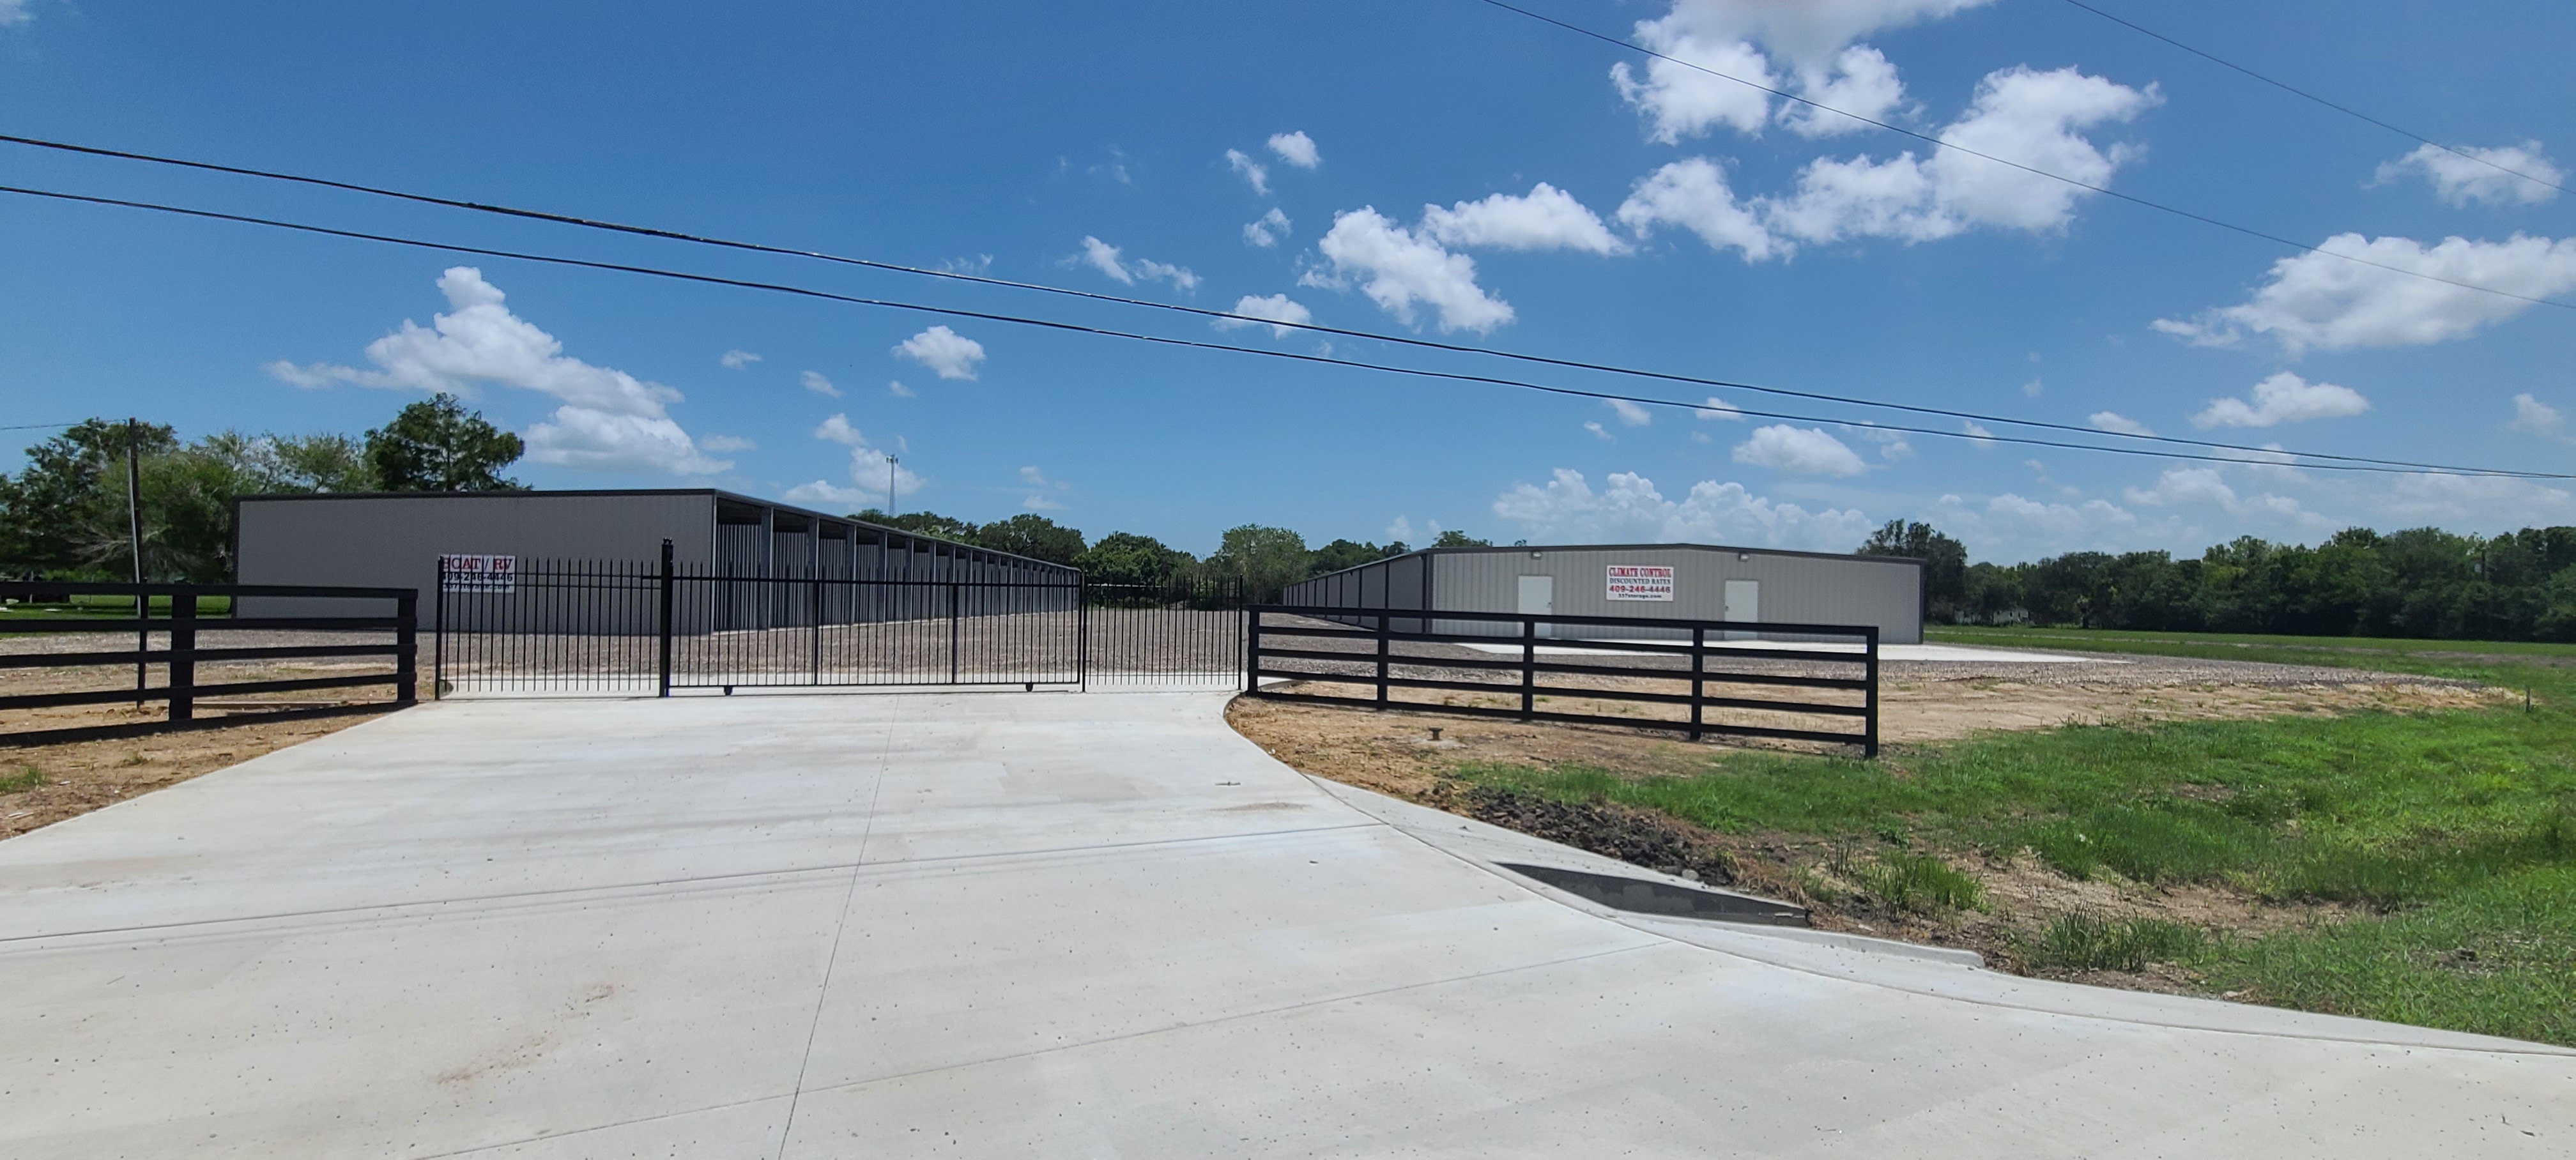 3 Thirty-Seven Storage LLC in Hamshire, TX 